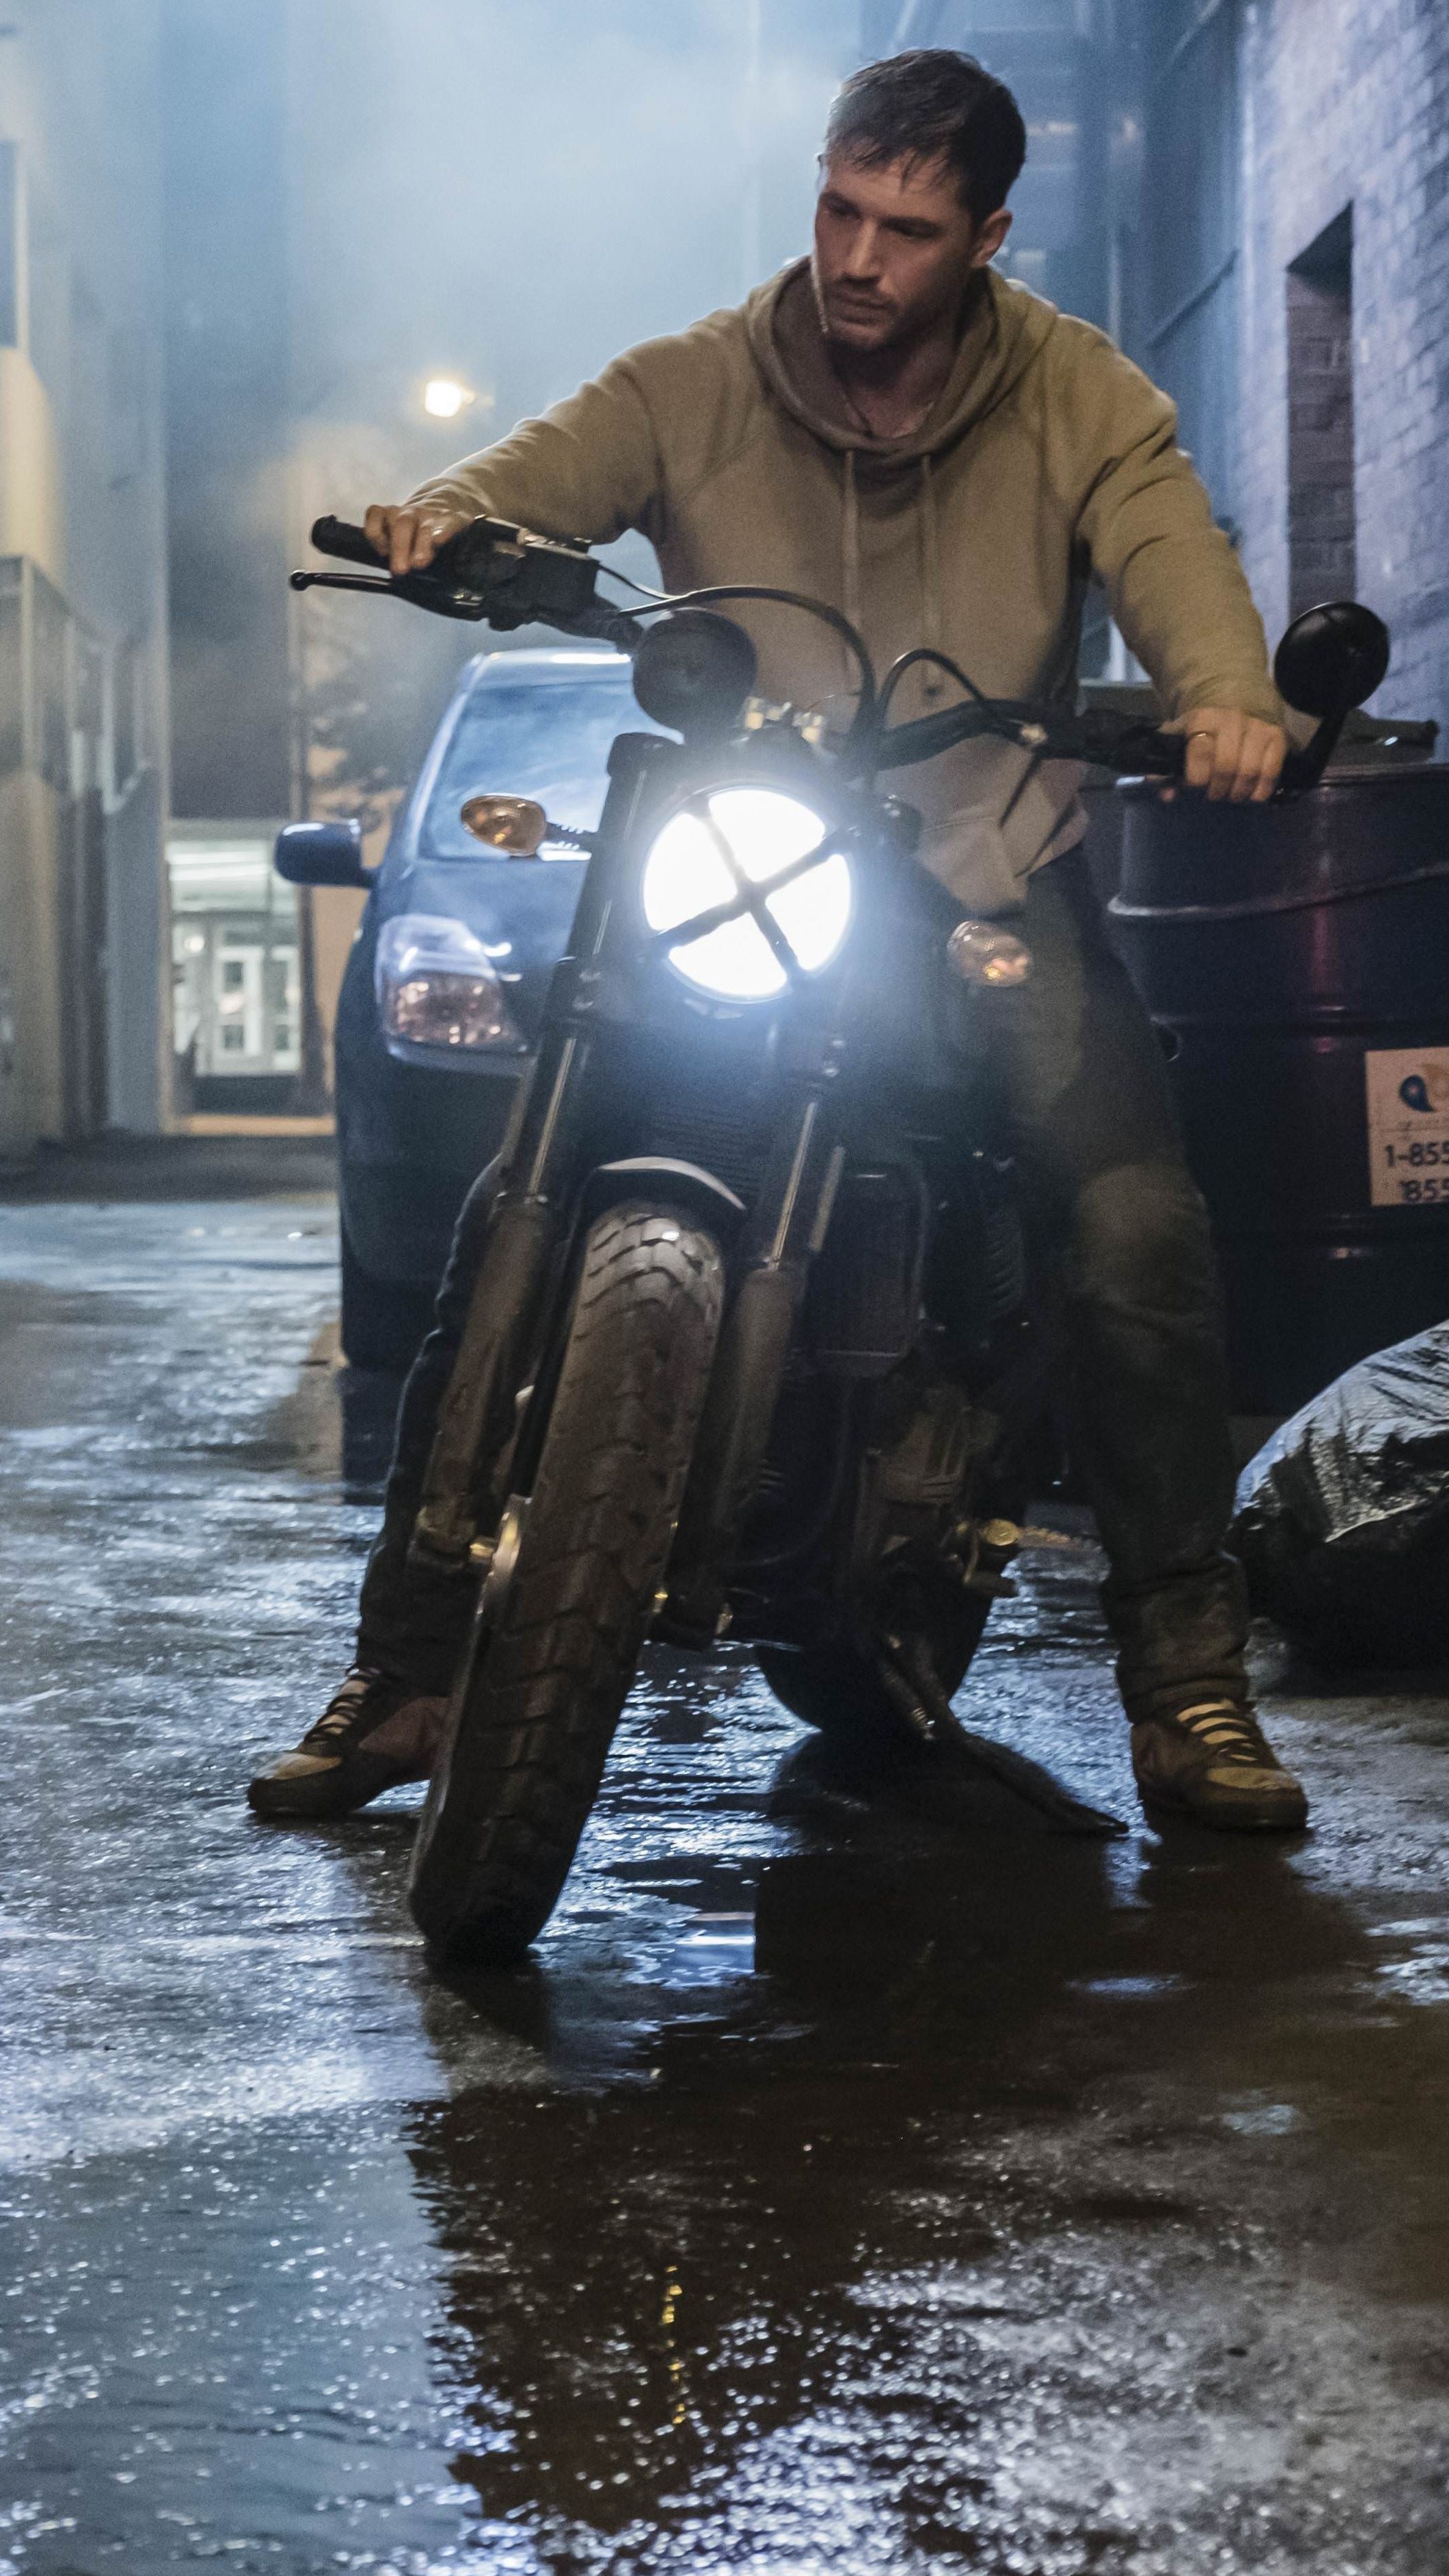 Tom Hardy As Eddie Brock In Venom Movie 2018 Sony Xperia X, XZ, Z5 Premium HD 4k Wallpaper, Image, Background, Photo and Picture